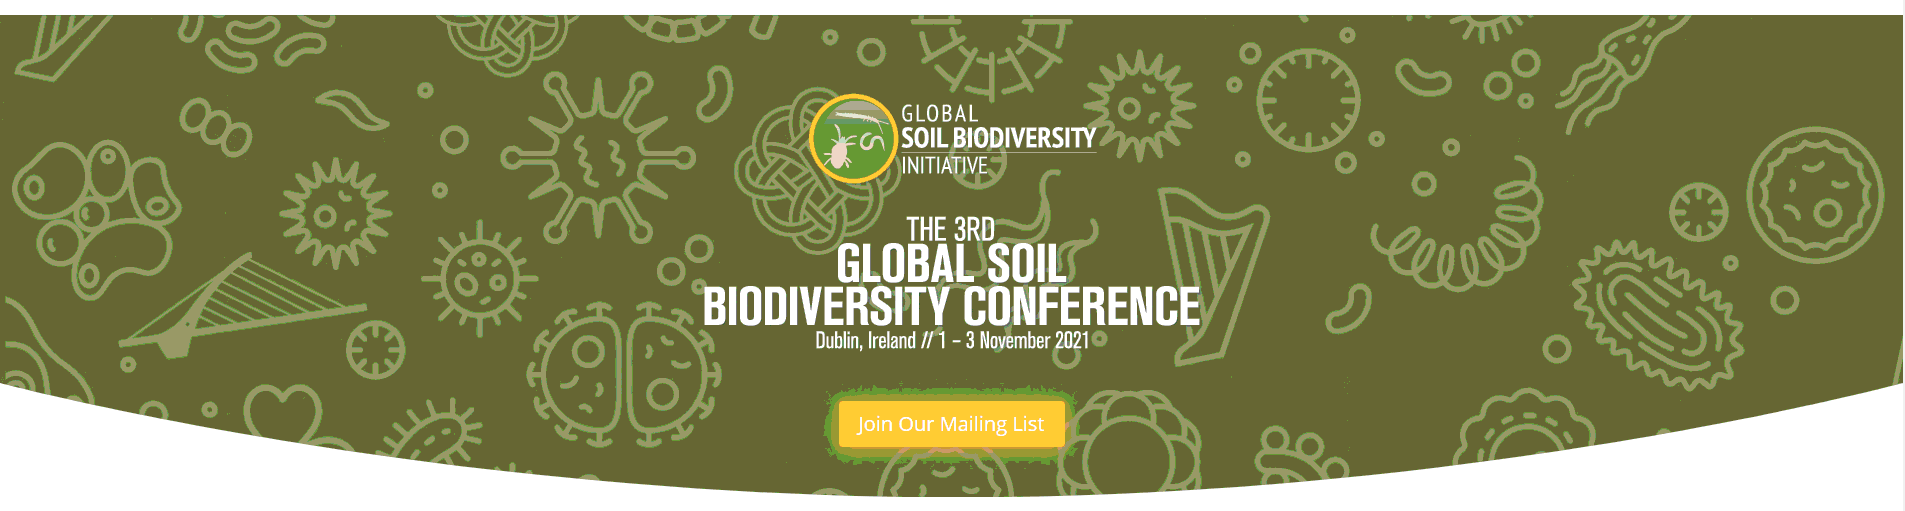 Global Soil Biodiversity Initiative GSBI